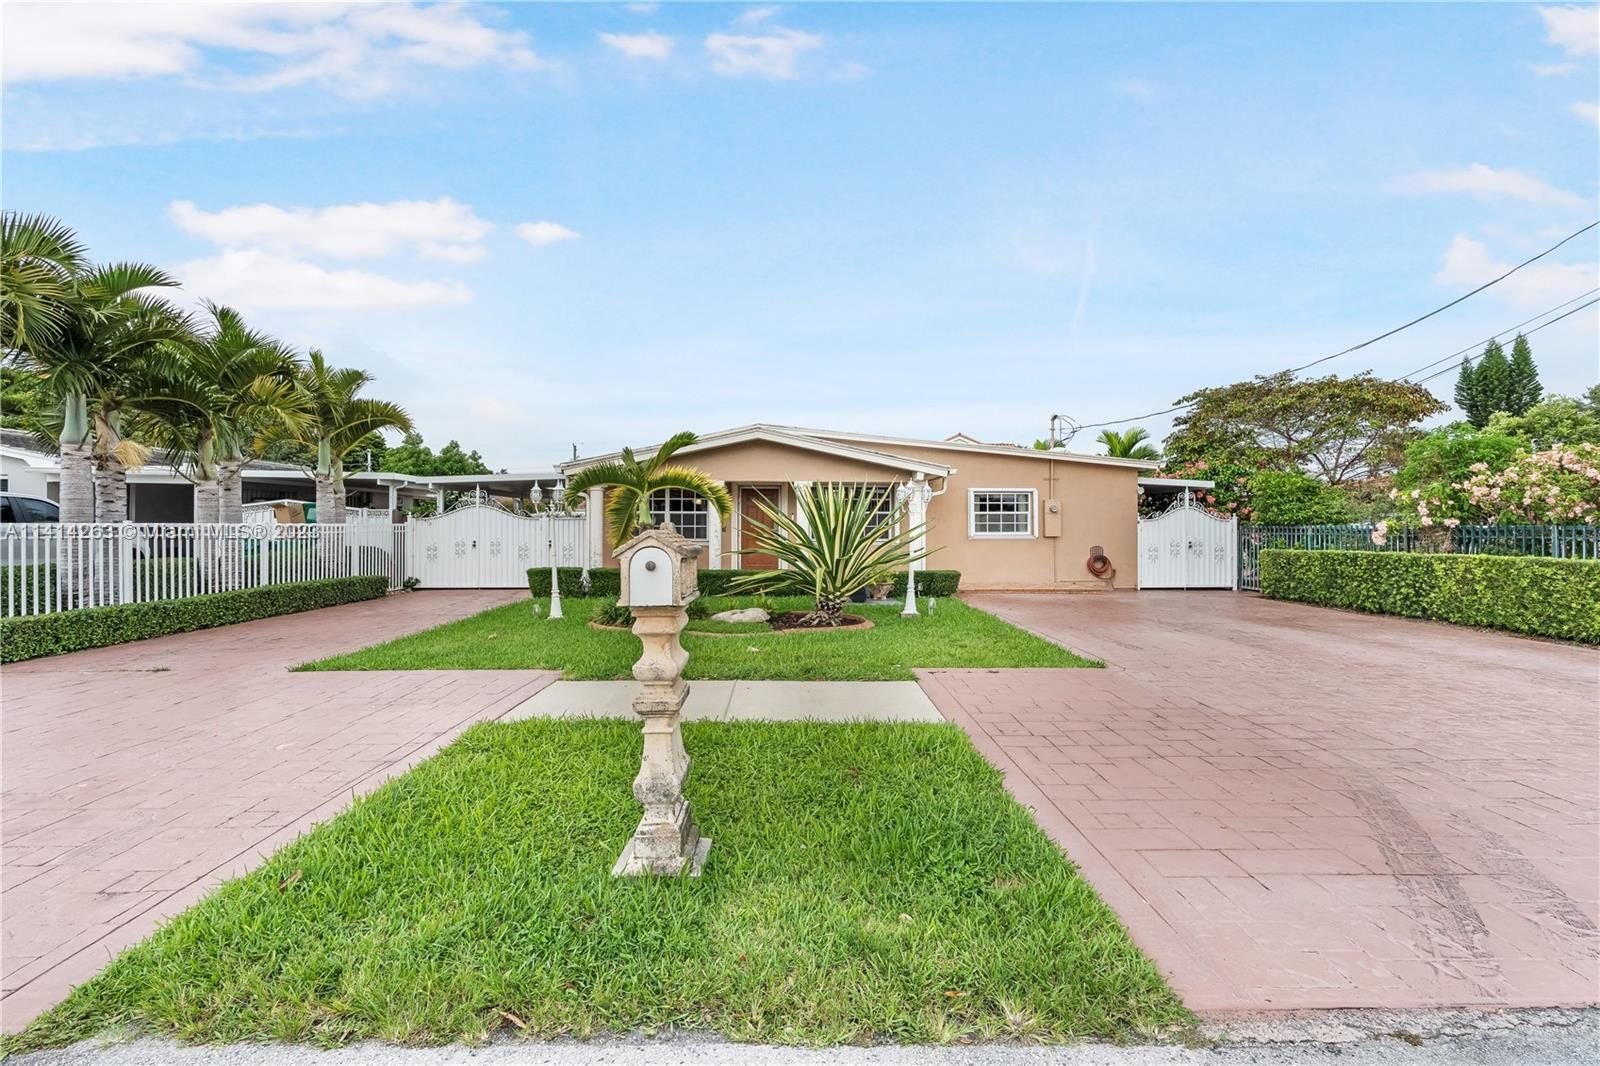 Real estate property located at 1300 74th Ct, Miami-Dade County, MIAMI GATEWAY REVISED, Miami, FL